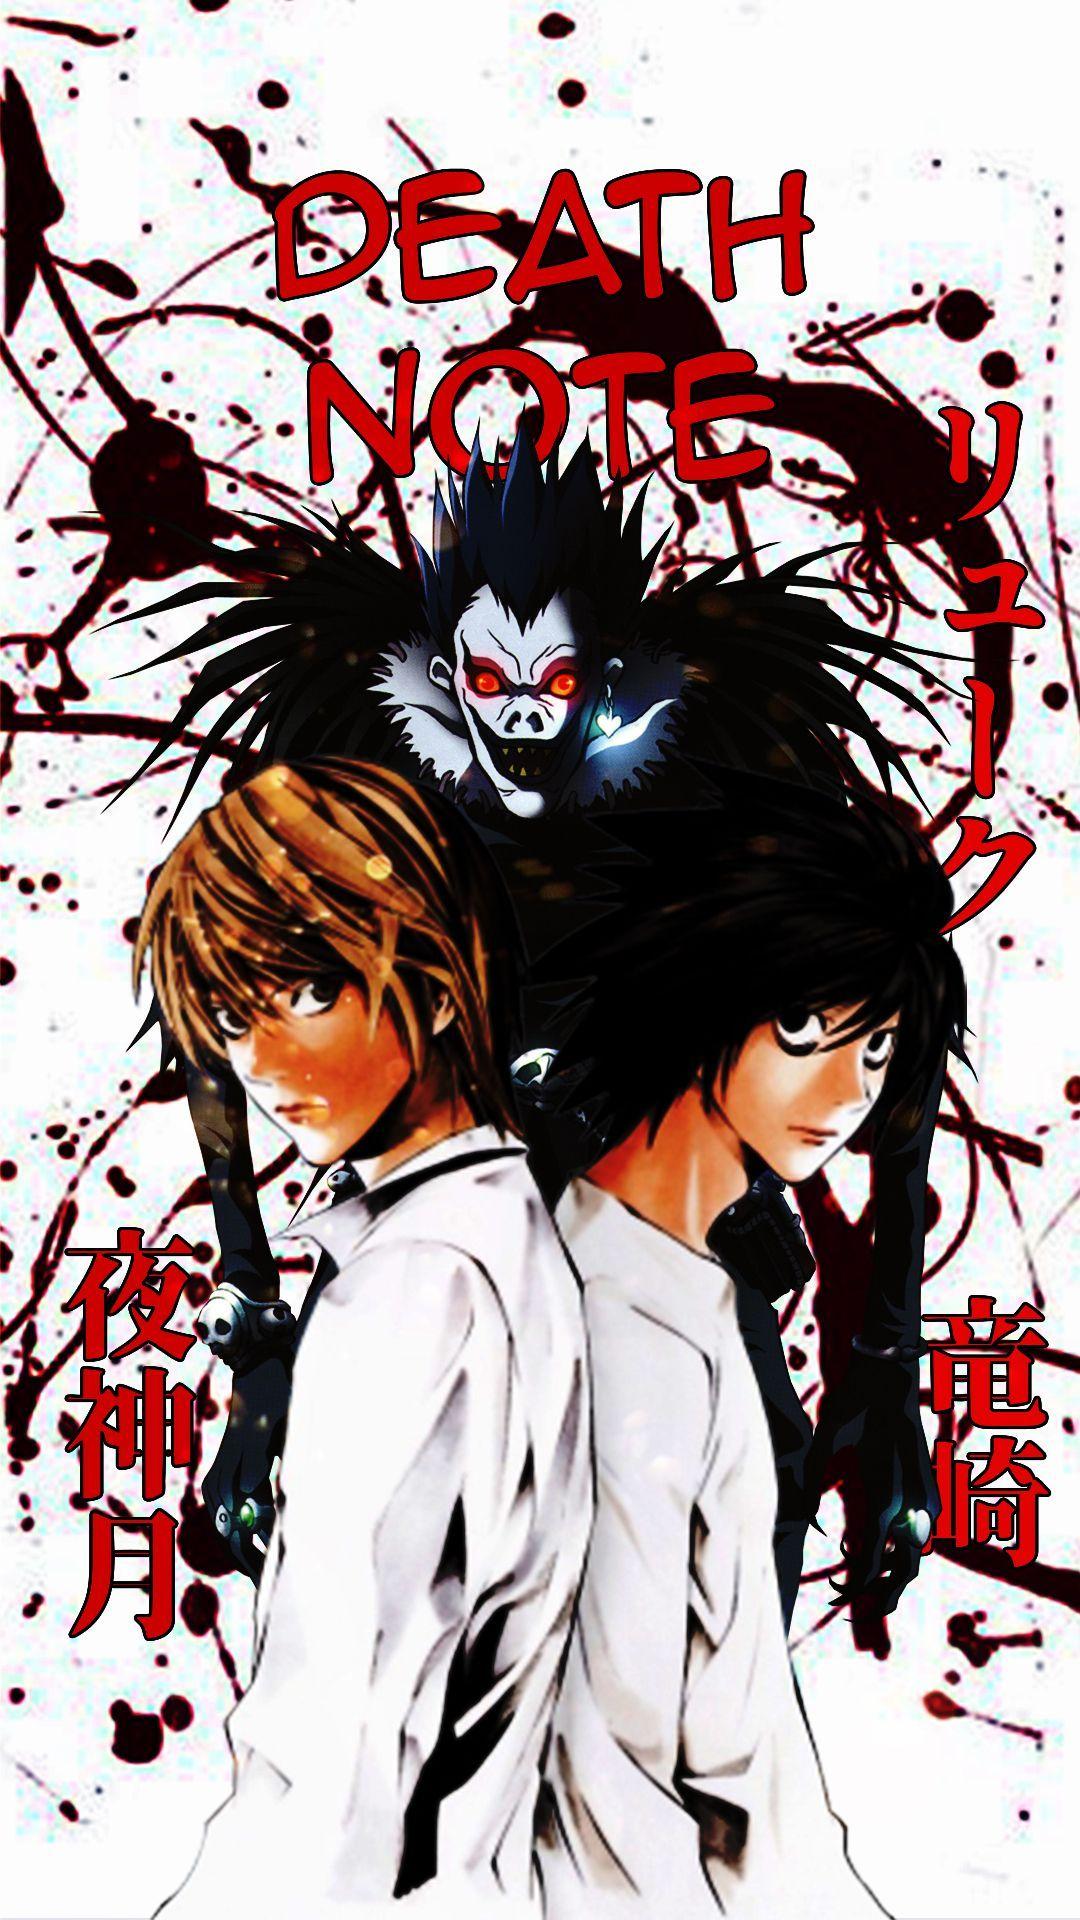 Light, Riuk, Ryuzaki. Death Note. Anime Wallpaper #anime